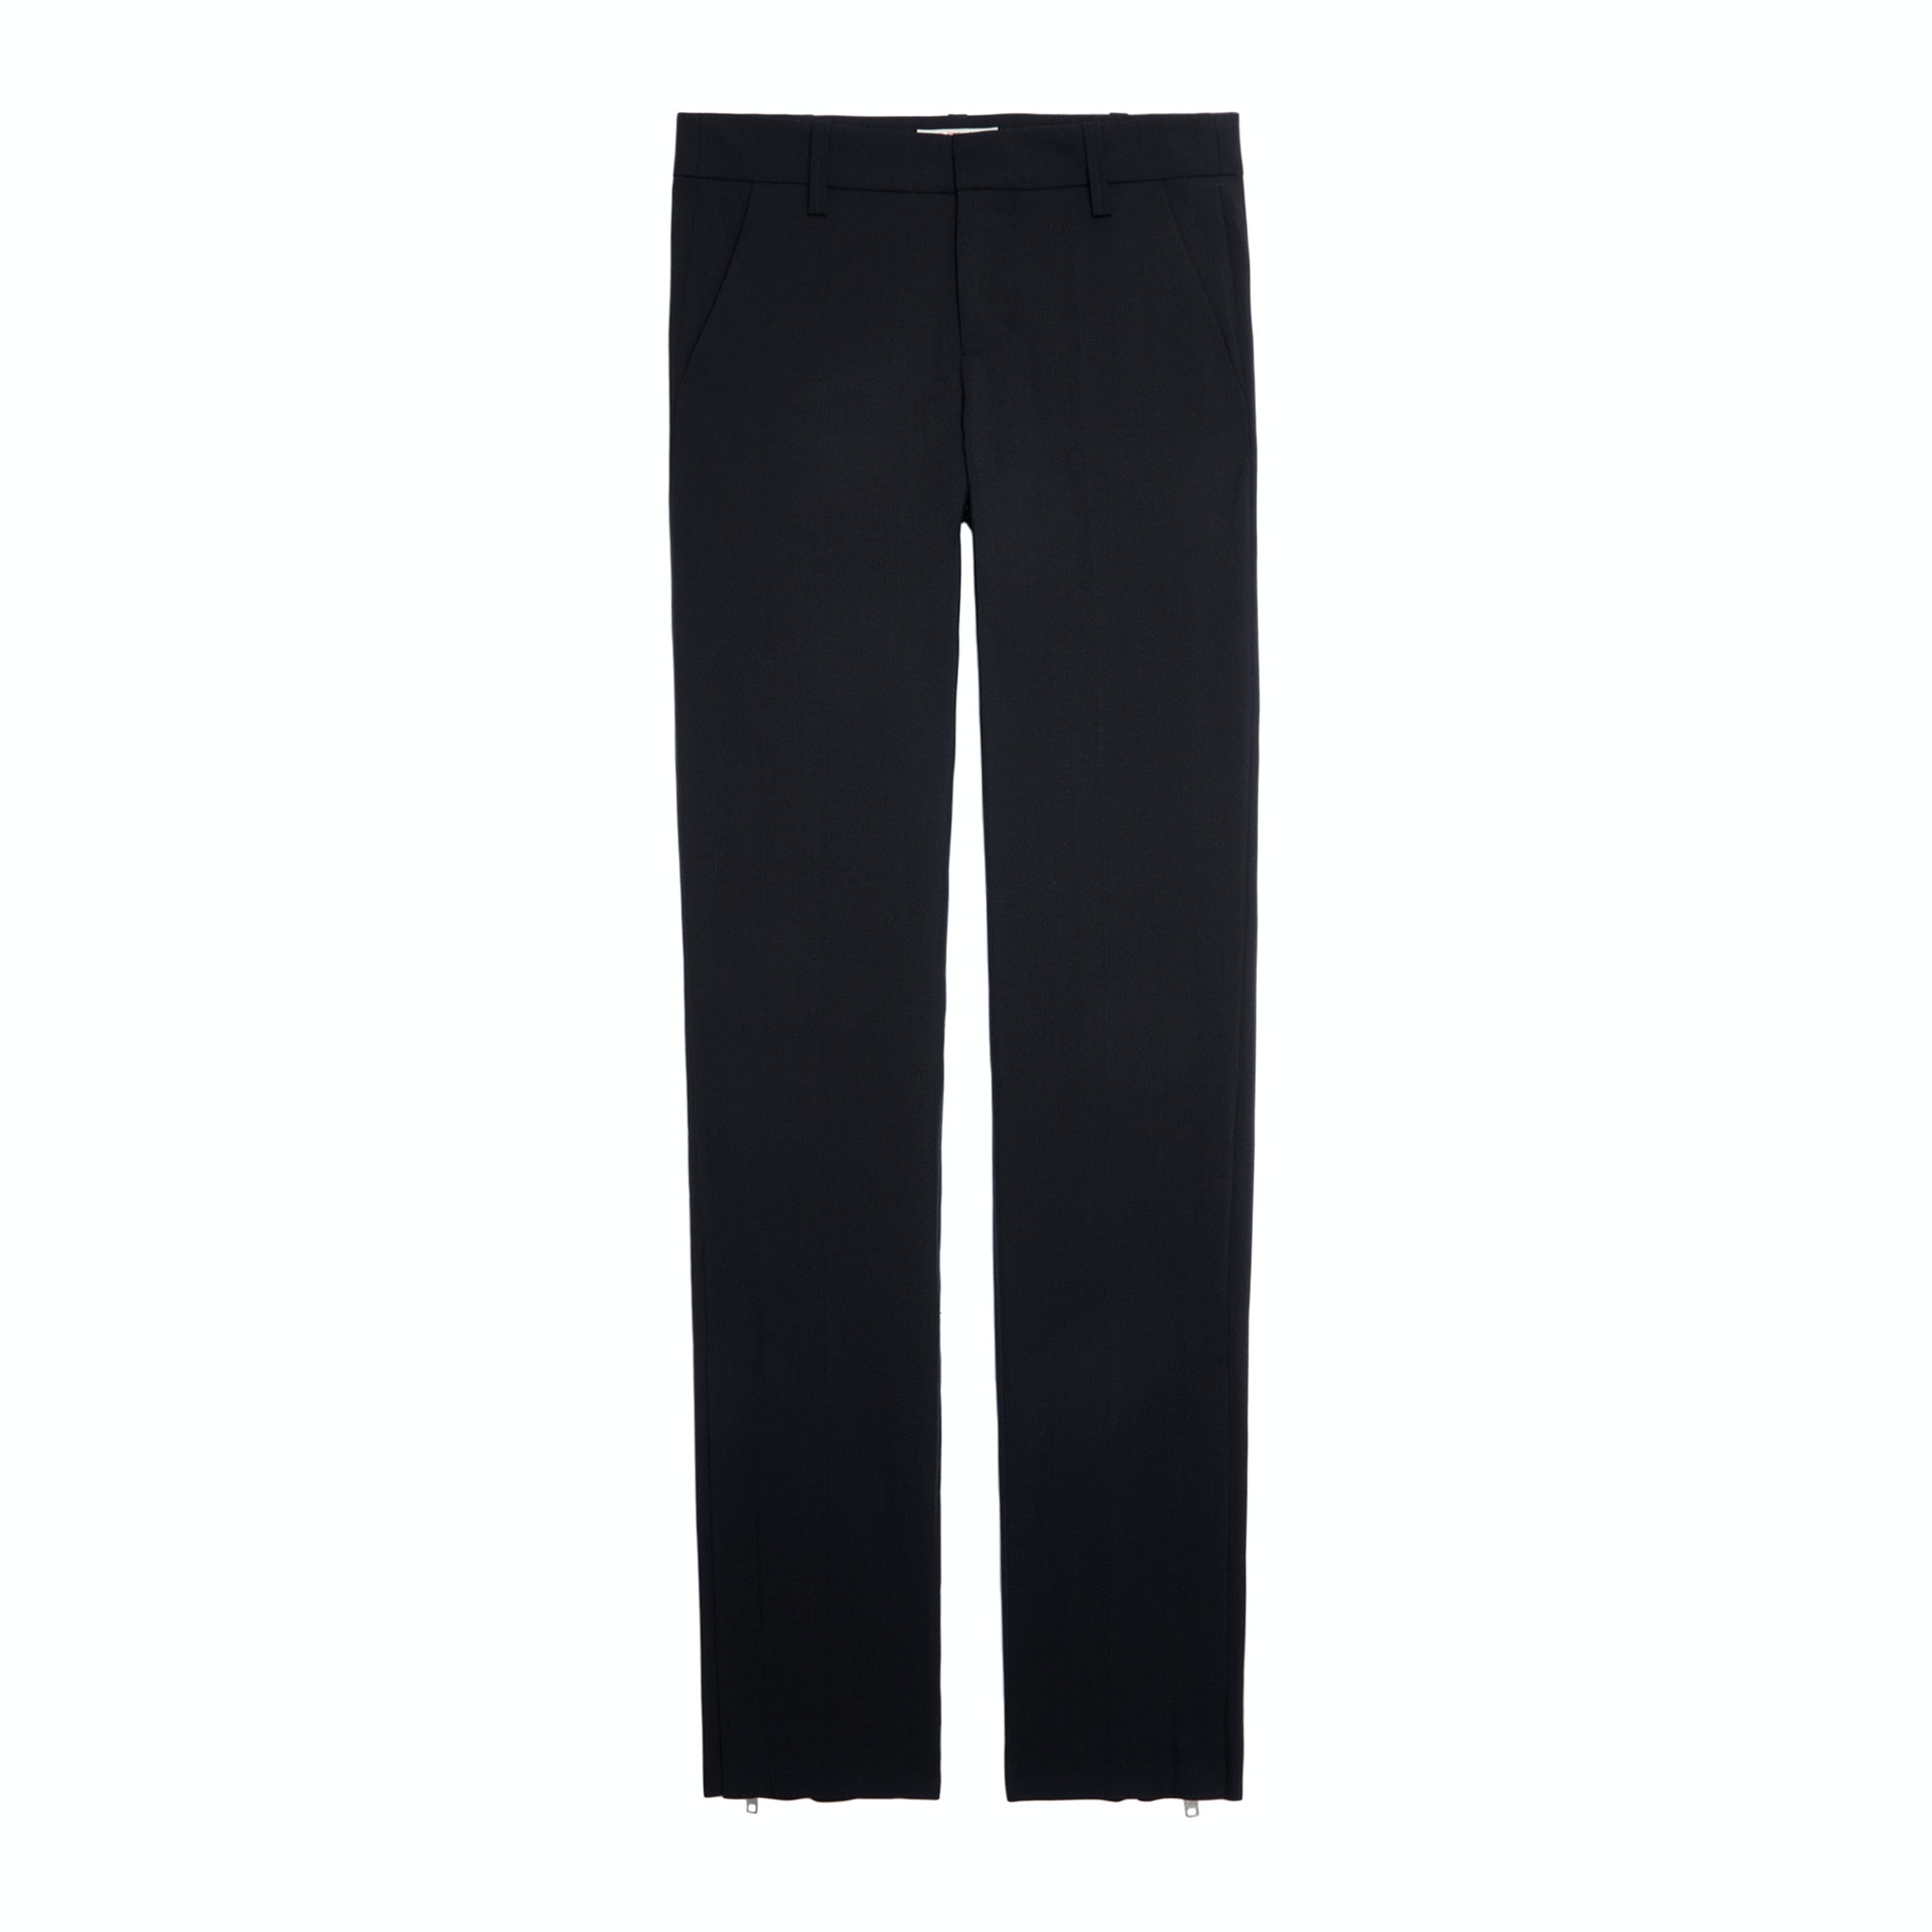 Pantalon Prune Noir - Taille 34 - Femme